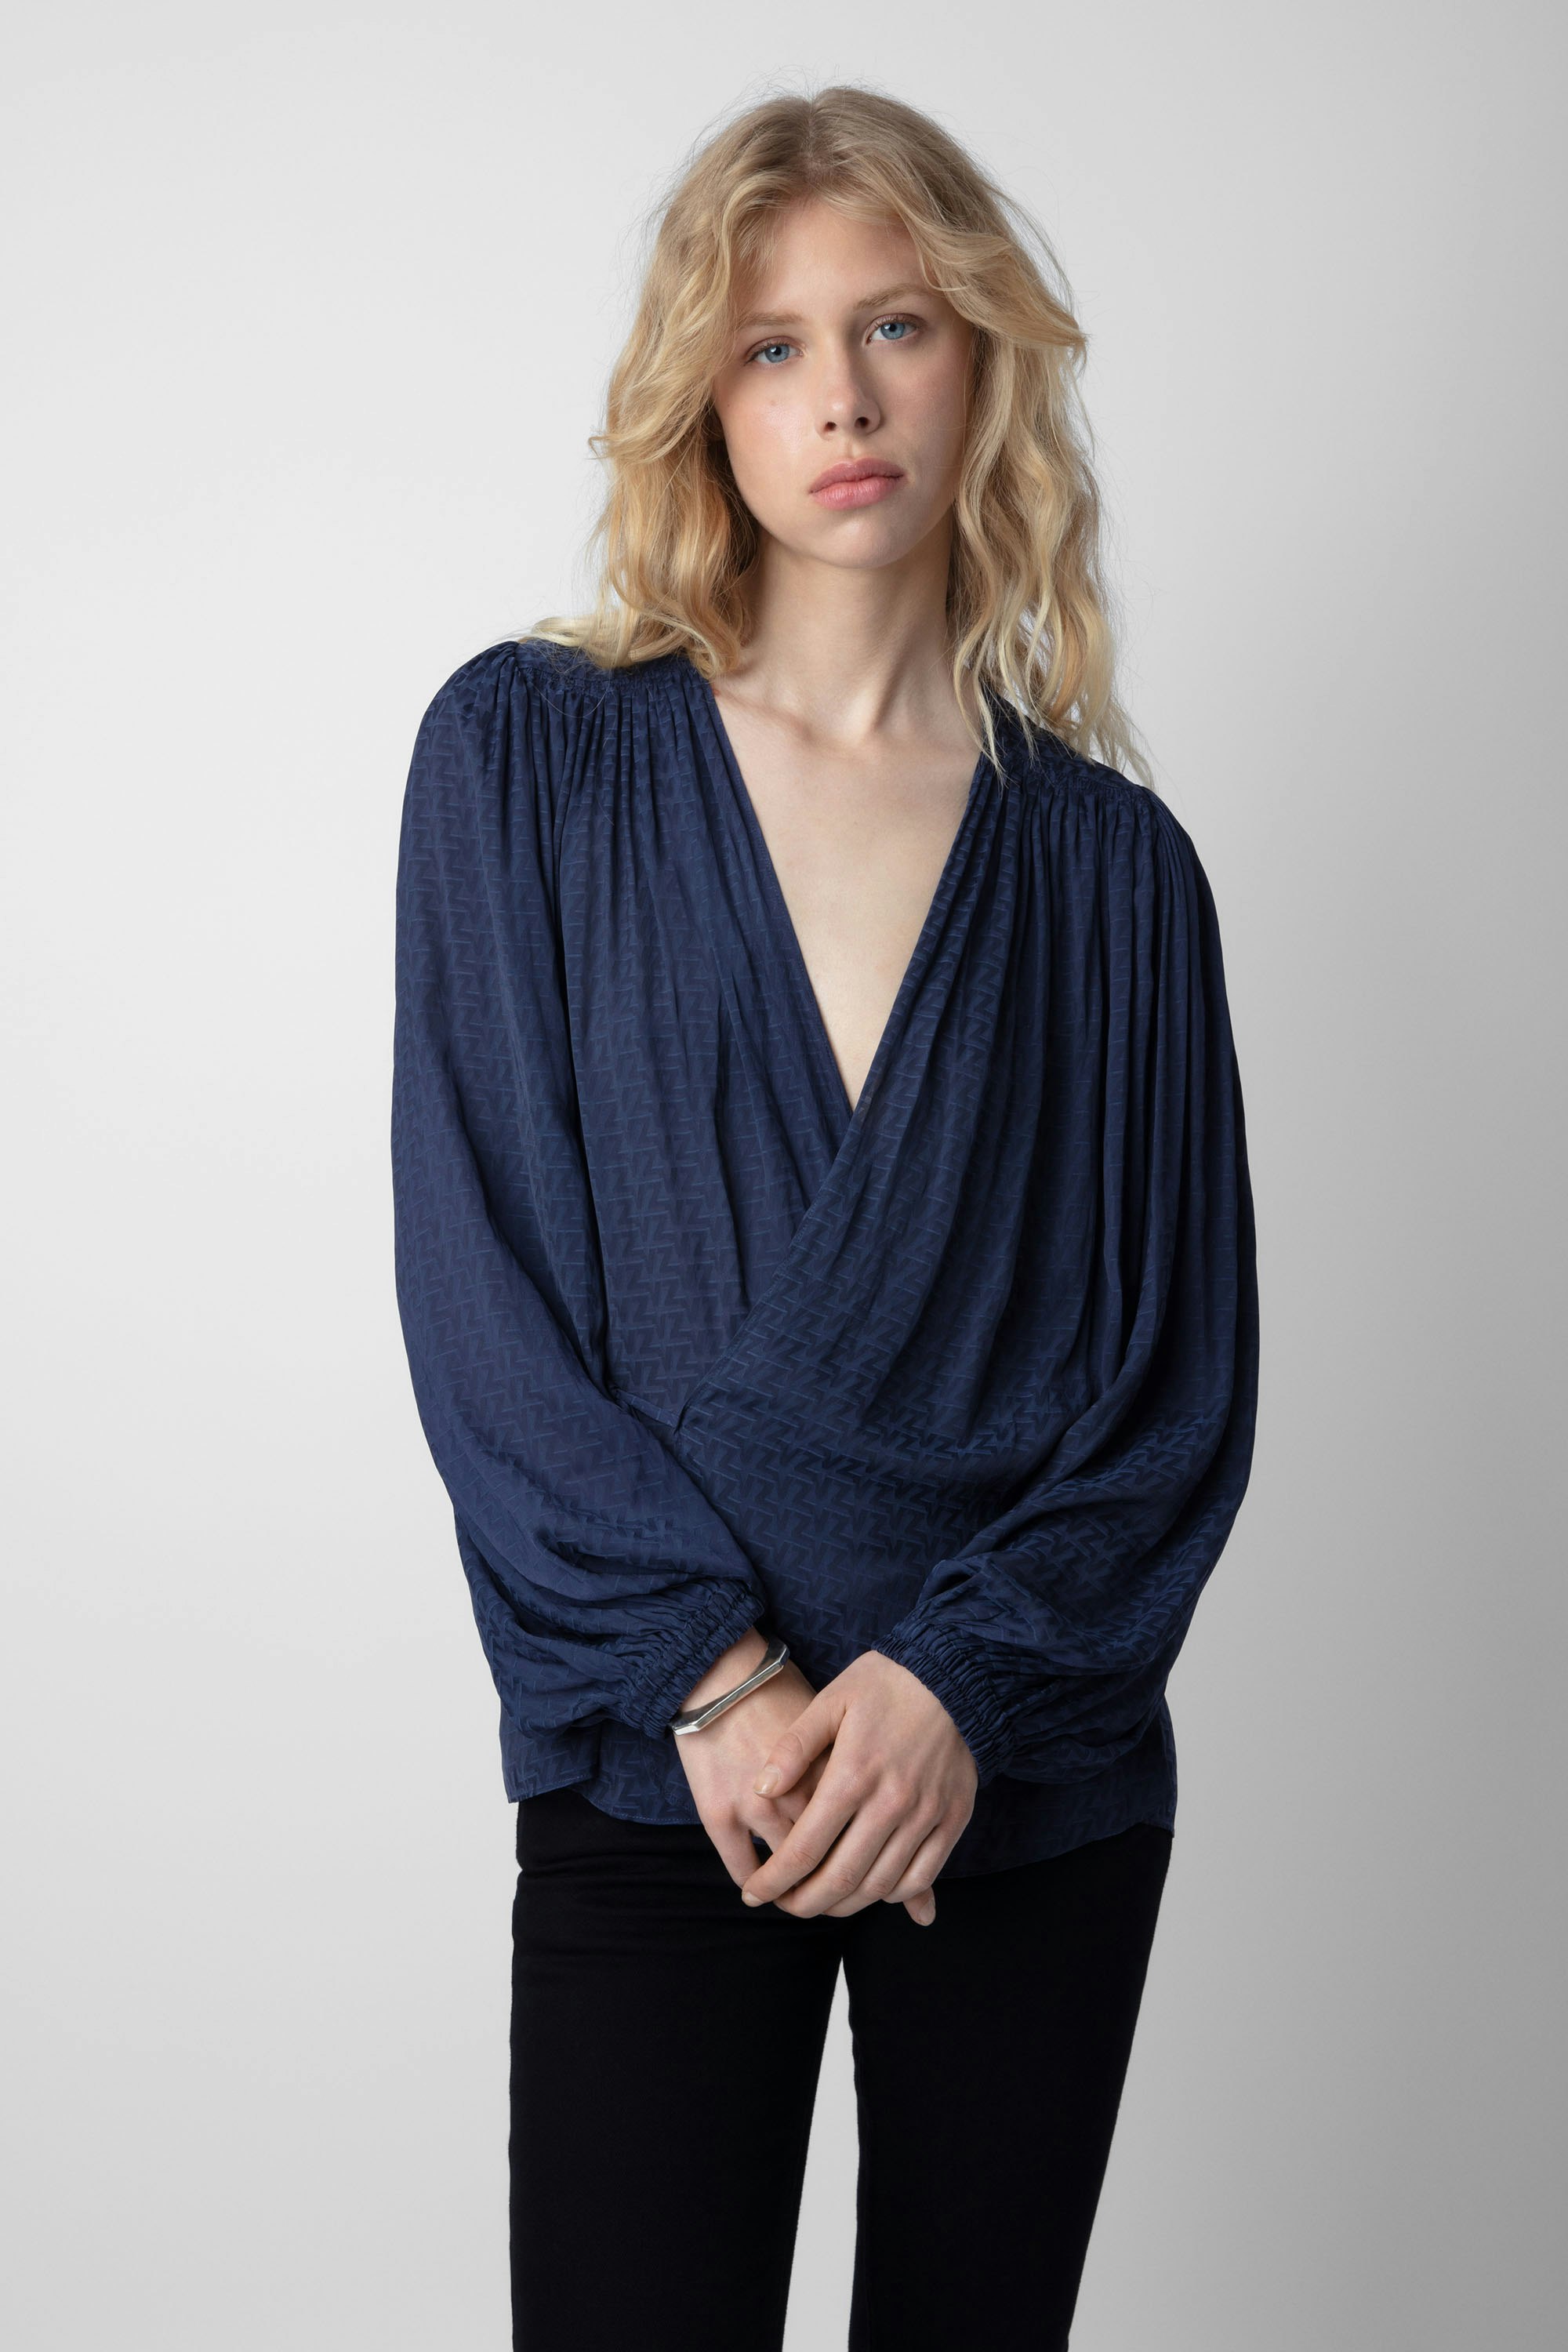 Tenew Satin Shirt - Women’s wrapover draped navy blue satin shirt, embellished with ZV print.